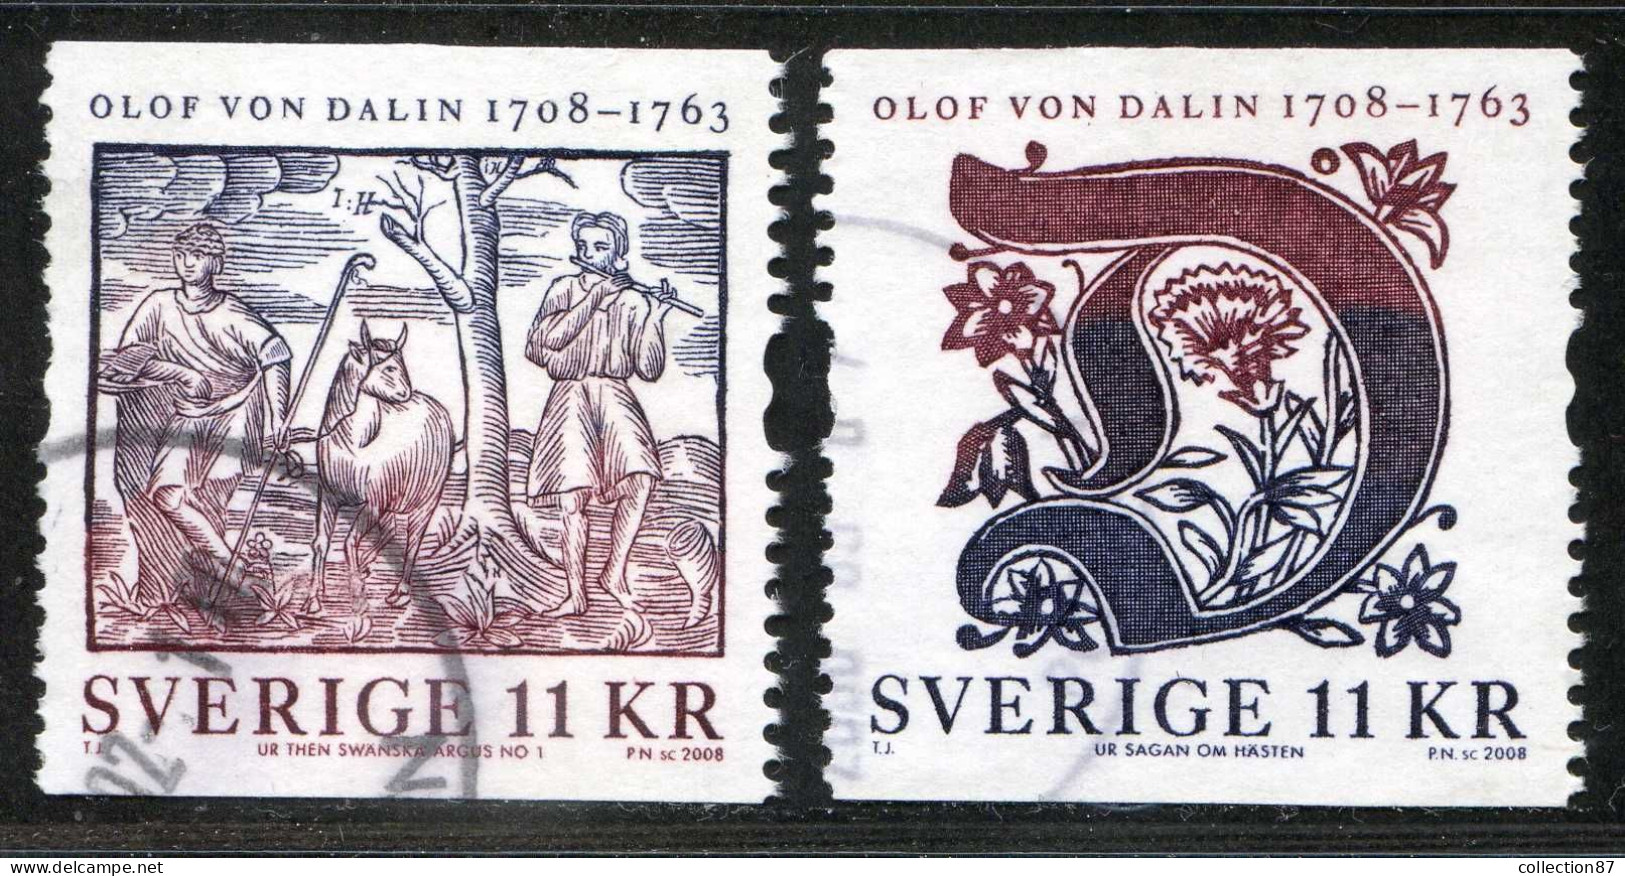 Réf 77 < SUEDE Année 2008 < Yvert N° 2609 à 2610 Ø Used < SWEDEN < Olof Von Dalin > Ecrivain Et Historien - Usados